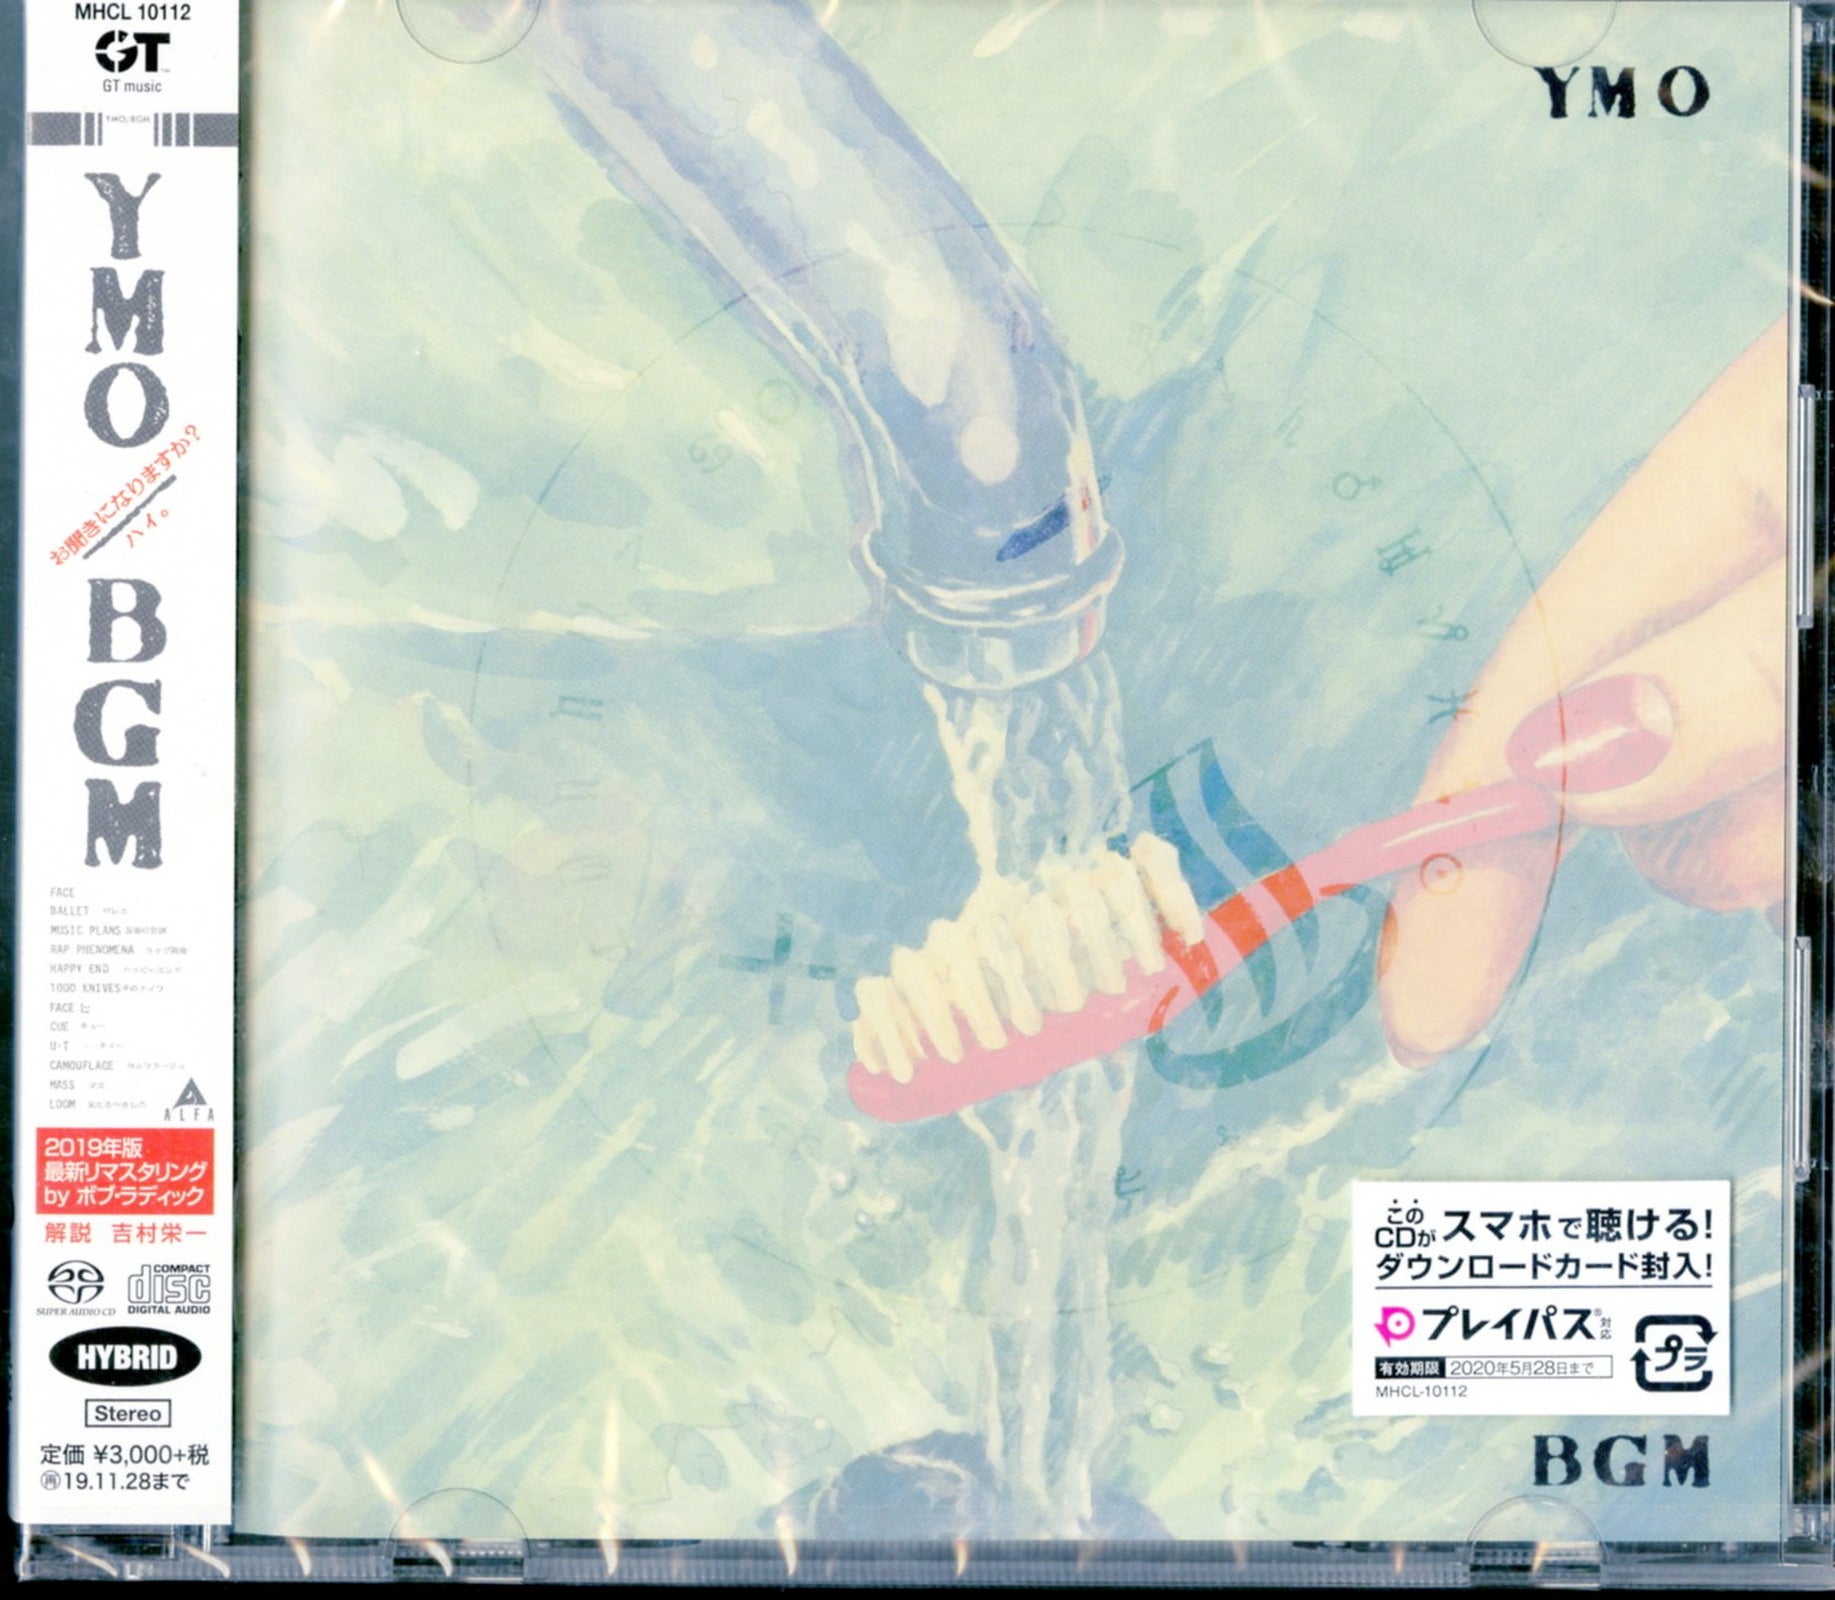 Yellow Magic Orchestra - Bgm - Japan SACD Hybrid Limited Edition